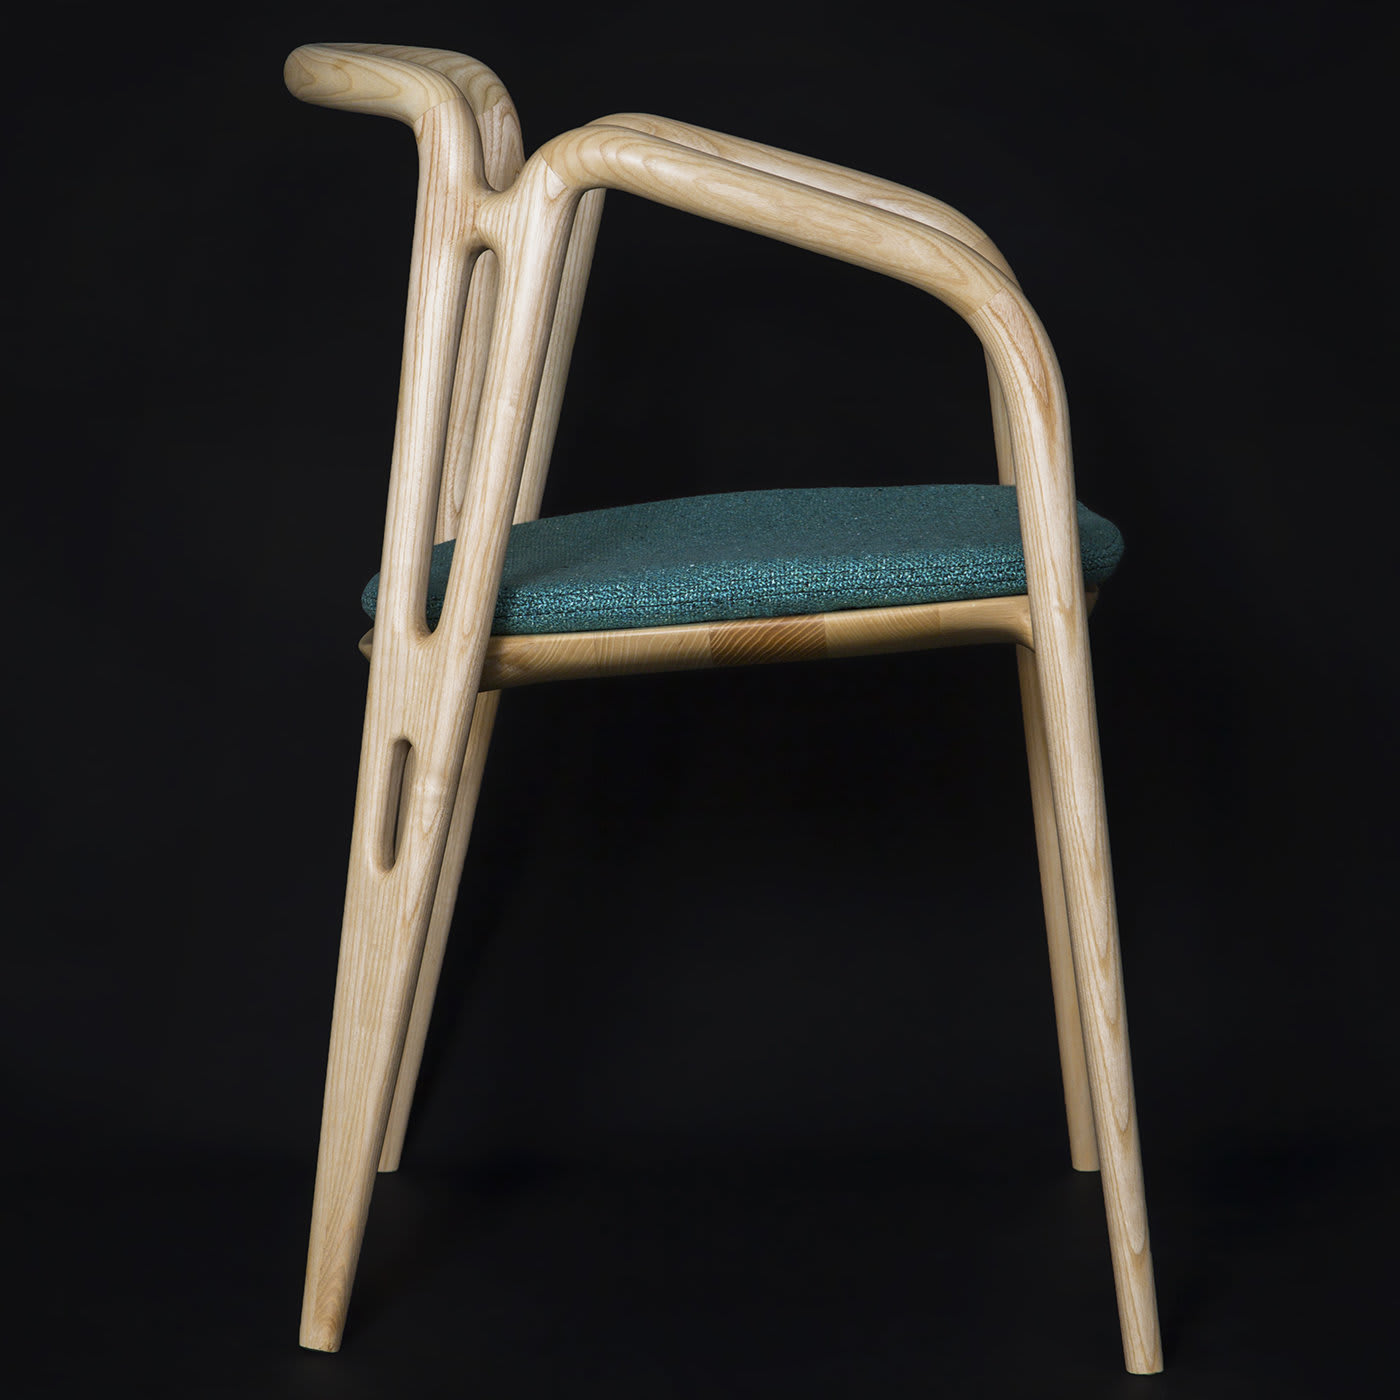 Vivo Chair with Turquoise Cushion - Marino Secco